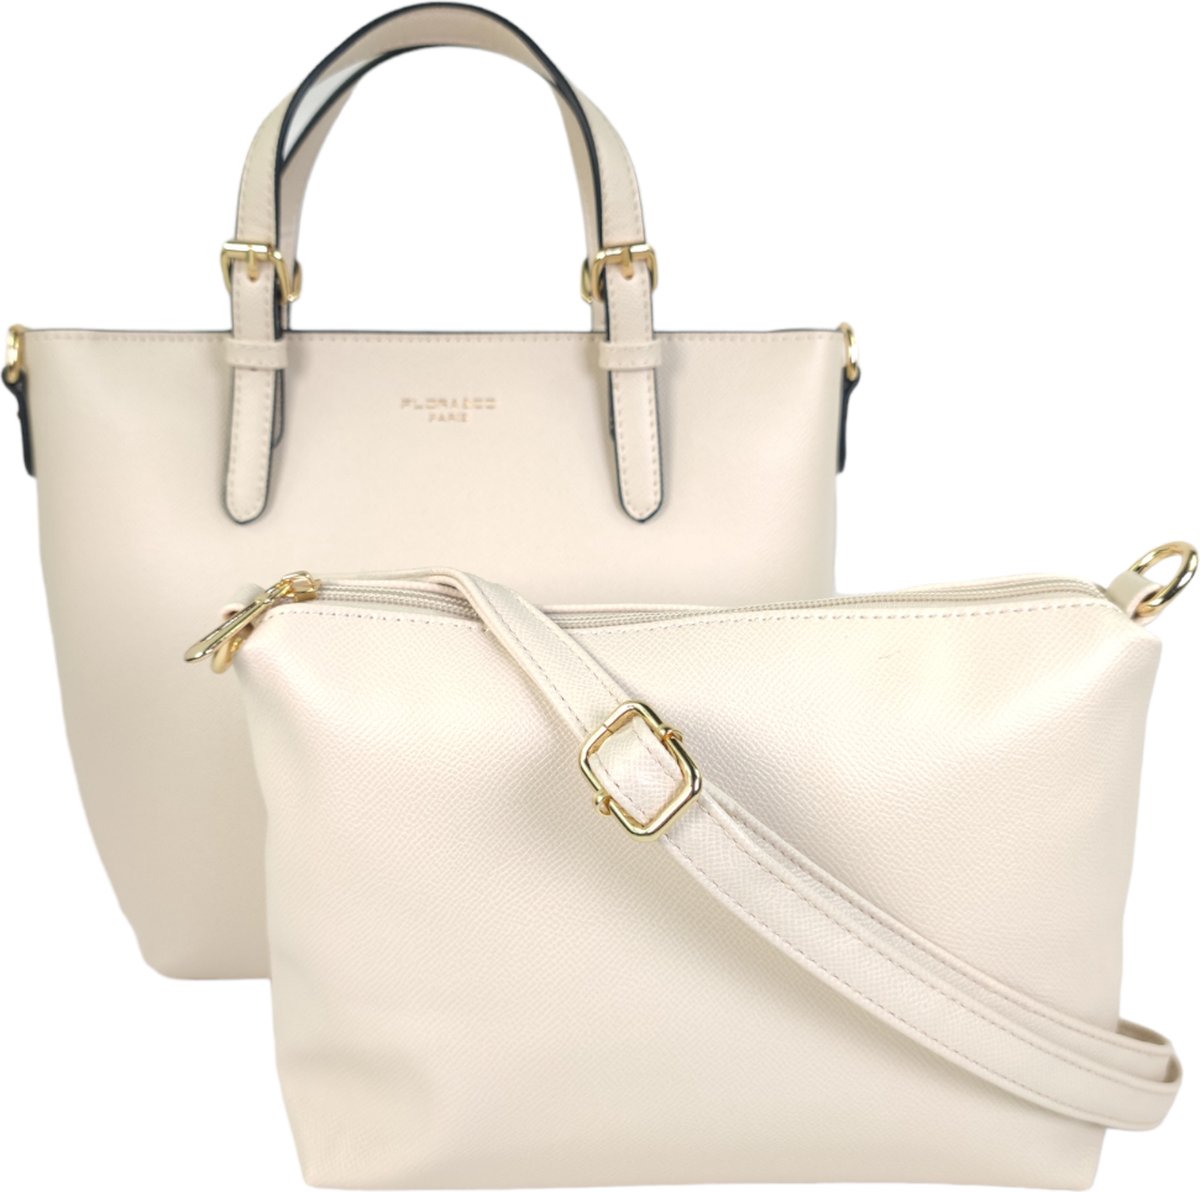 Flora&Co - Paris - Tas in tas/bag in bag - handtas/crossbody beige